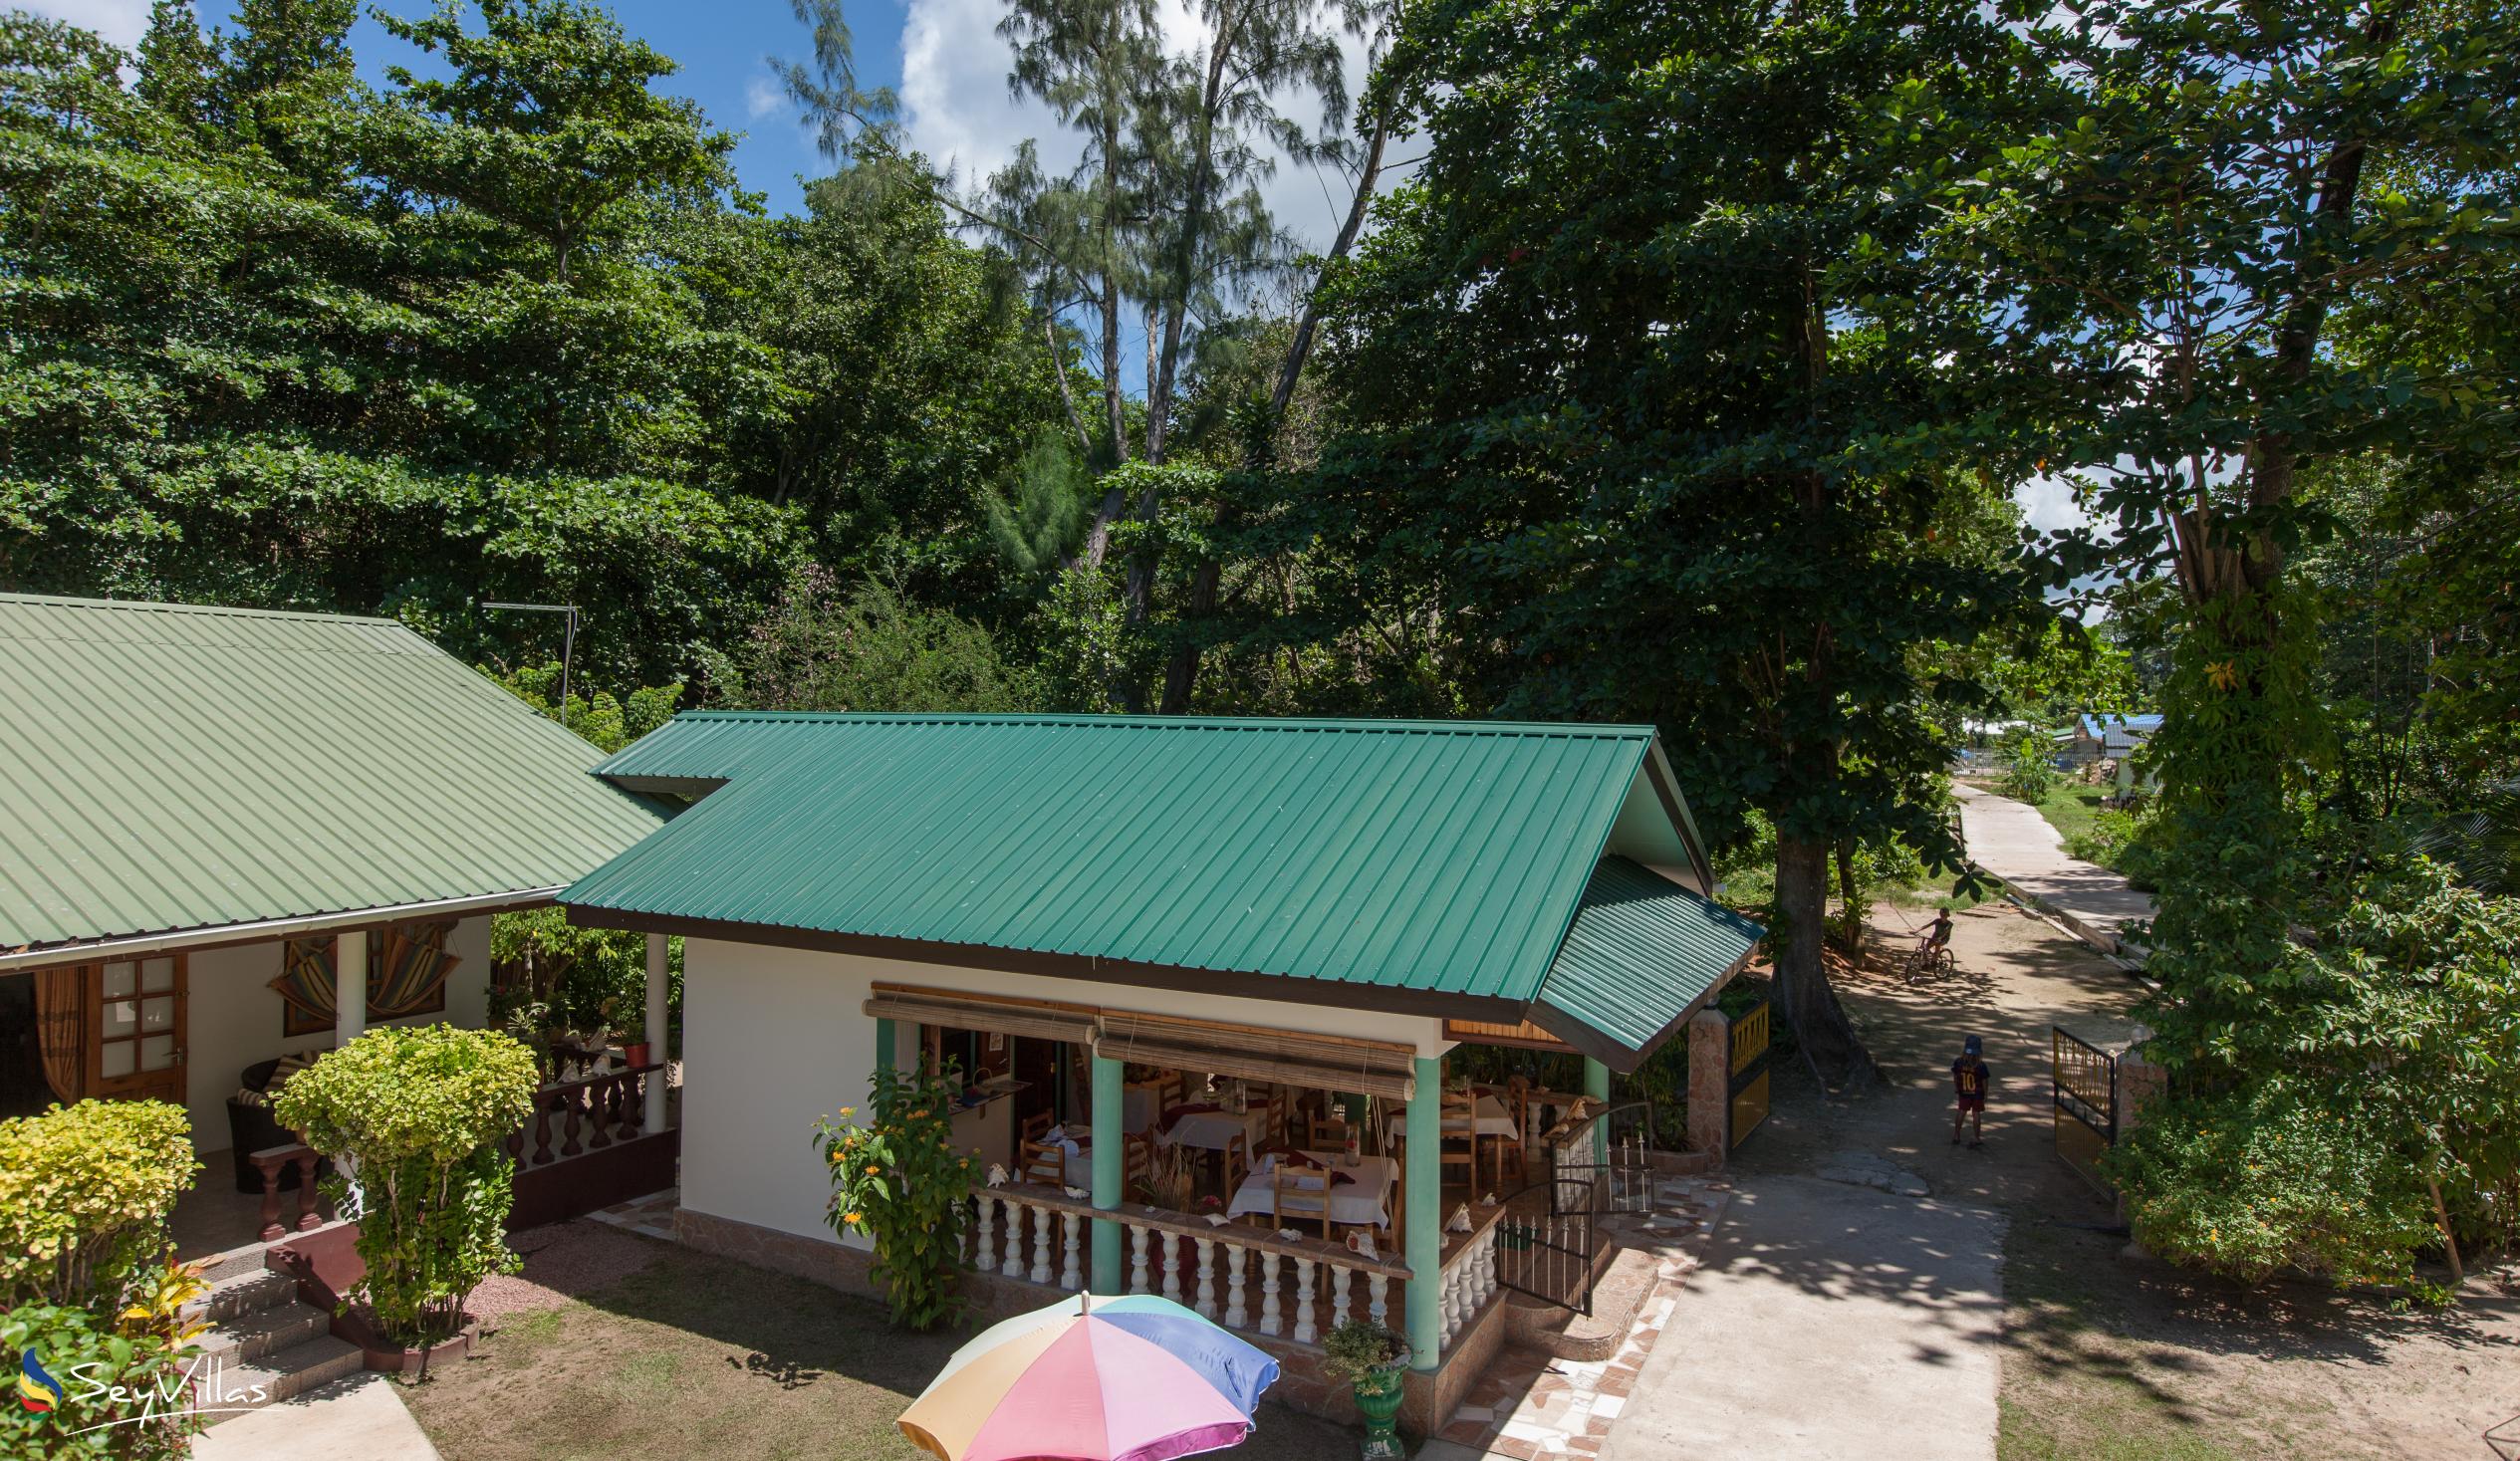 Photo 9: Tannette's Villa - Outdoor area - La Digue (Seychelles)